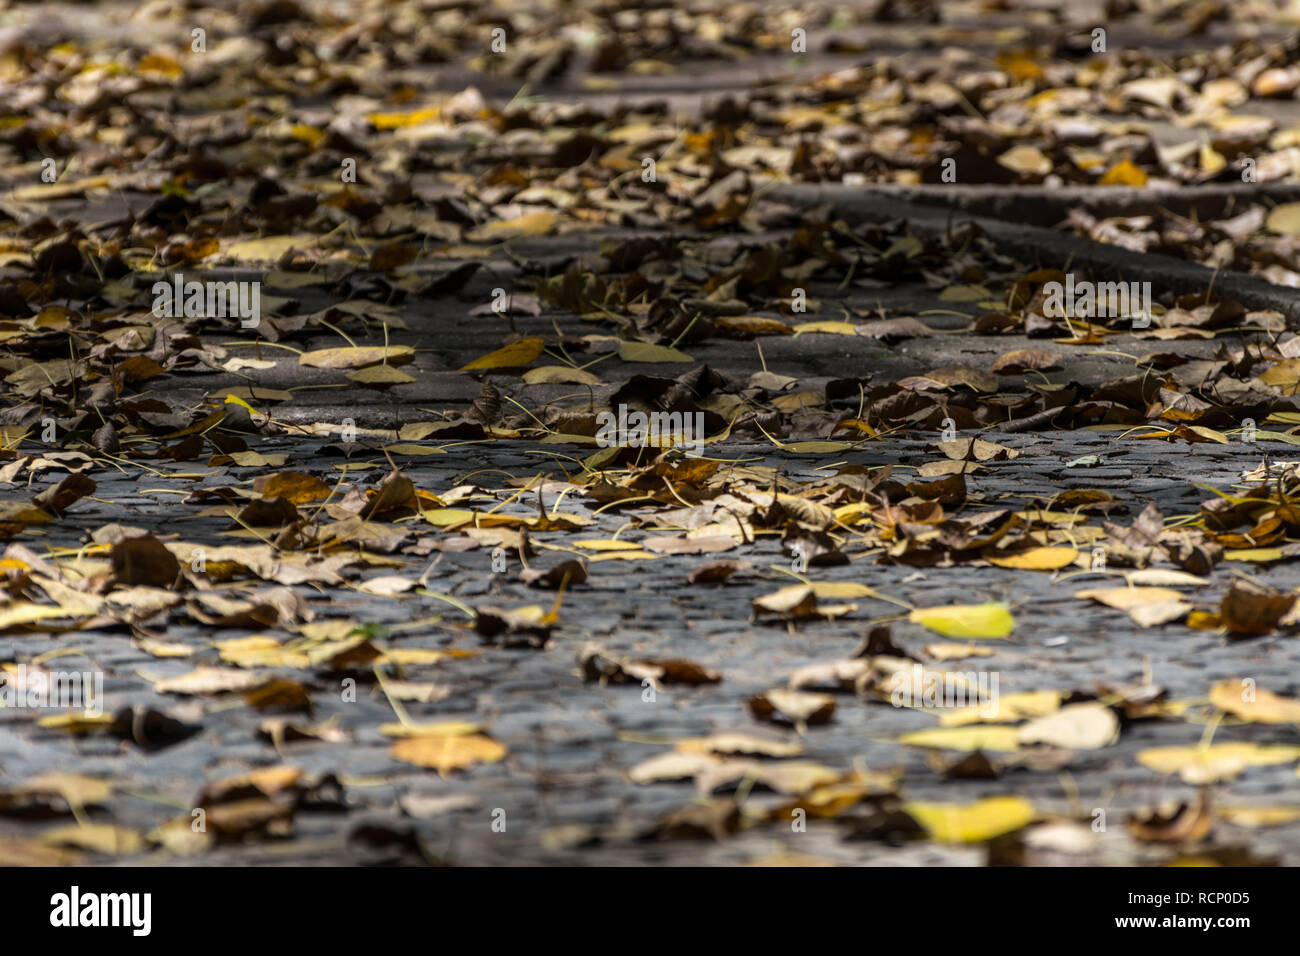 2019, january. Rio de Janeiro, Brazil. Dry yellow leaves on the floor. Stock Photo